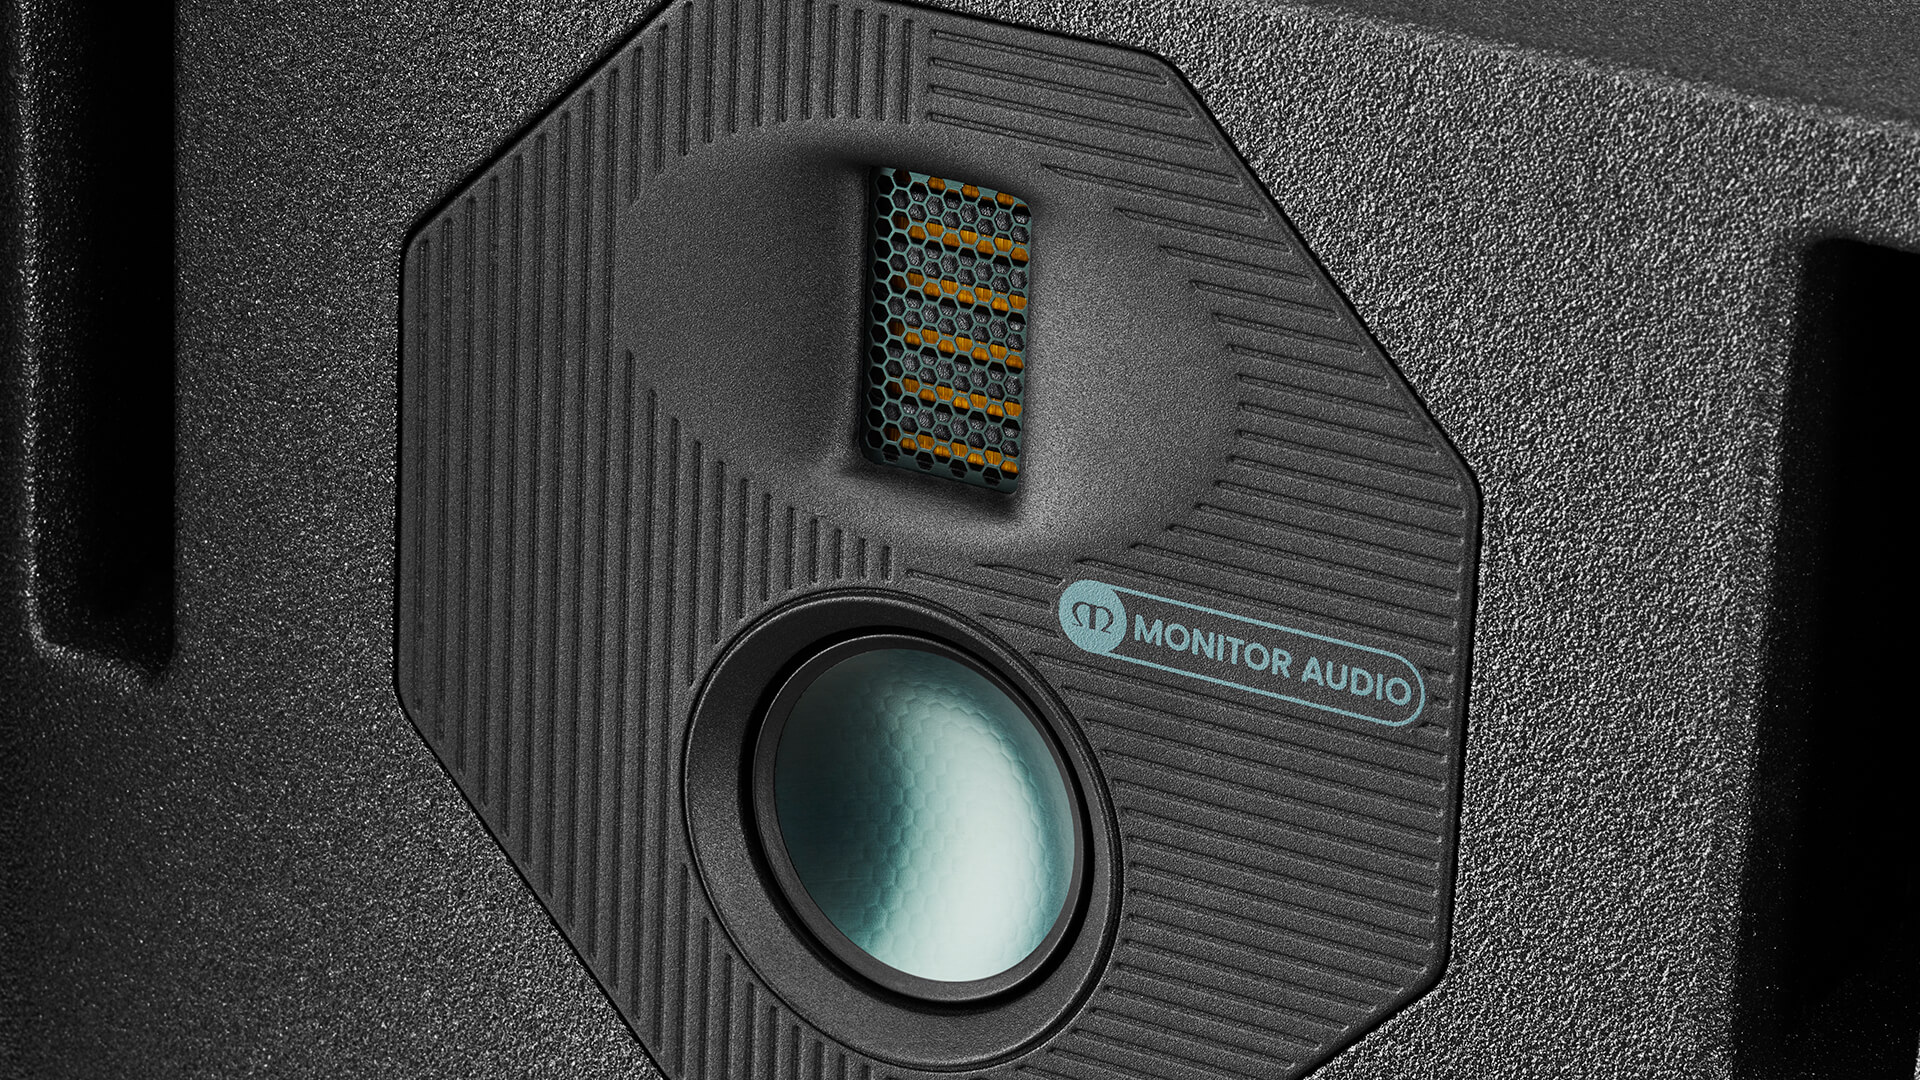 Monitor Audio Cinergy 100 Einbaulautsprecher